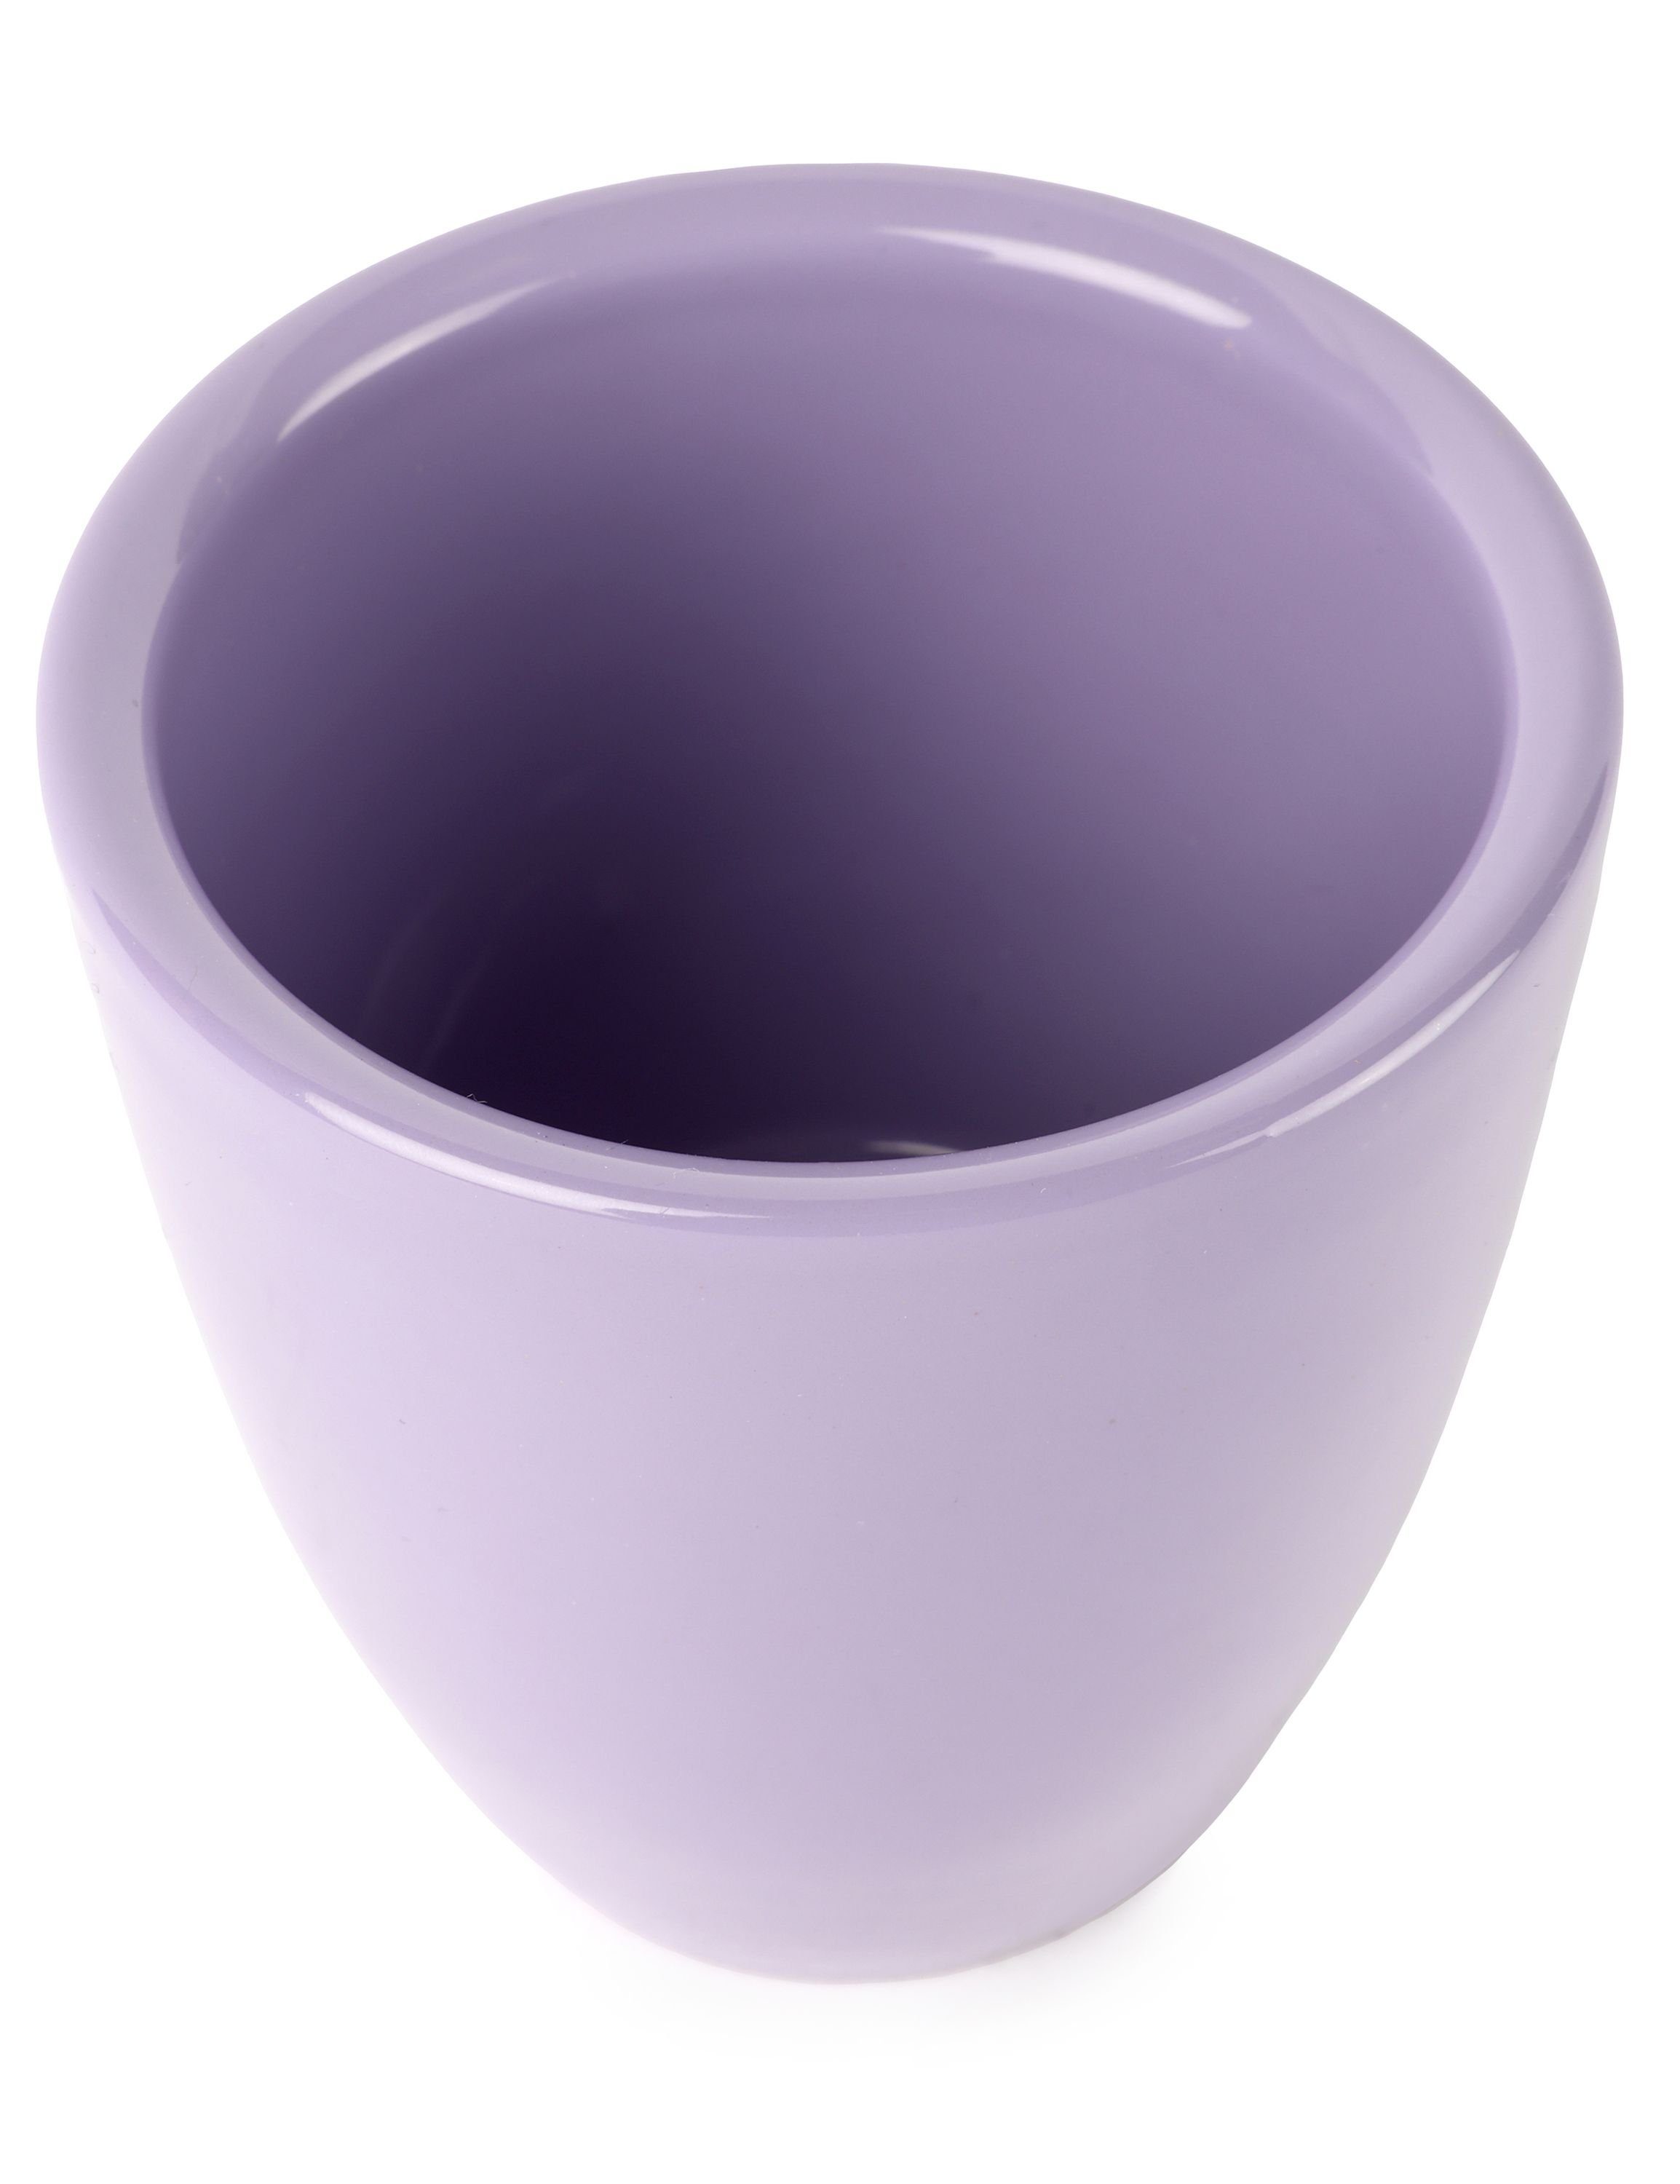 Keramik Garronda Blumentopf Pflanztopf Lavender045 GD-0017 Blumentopf